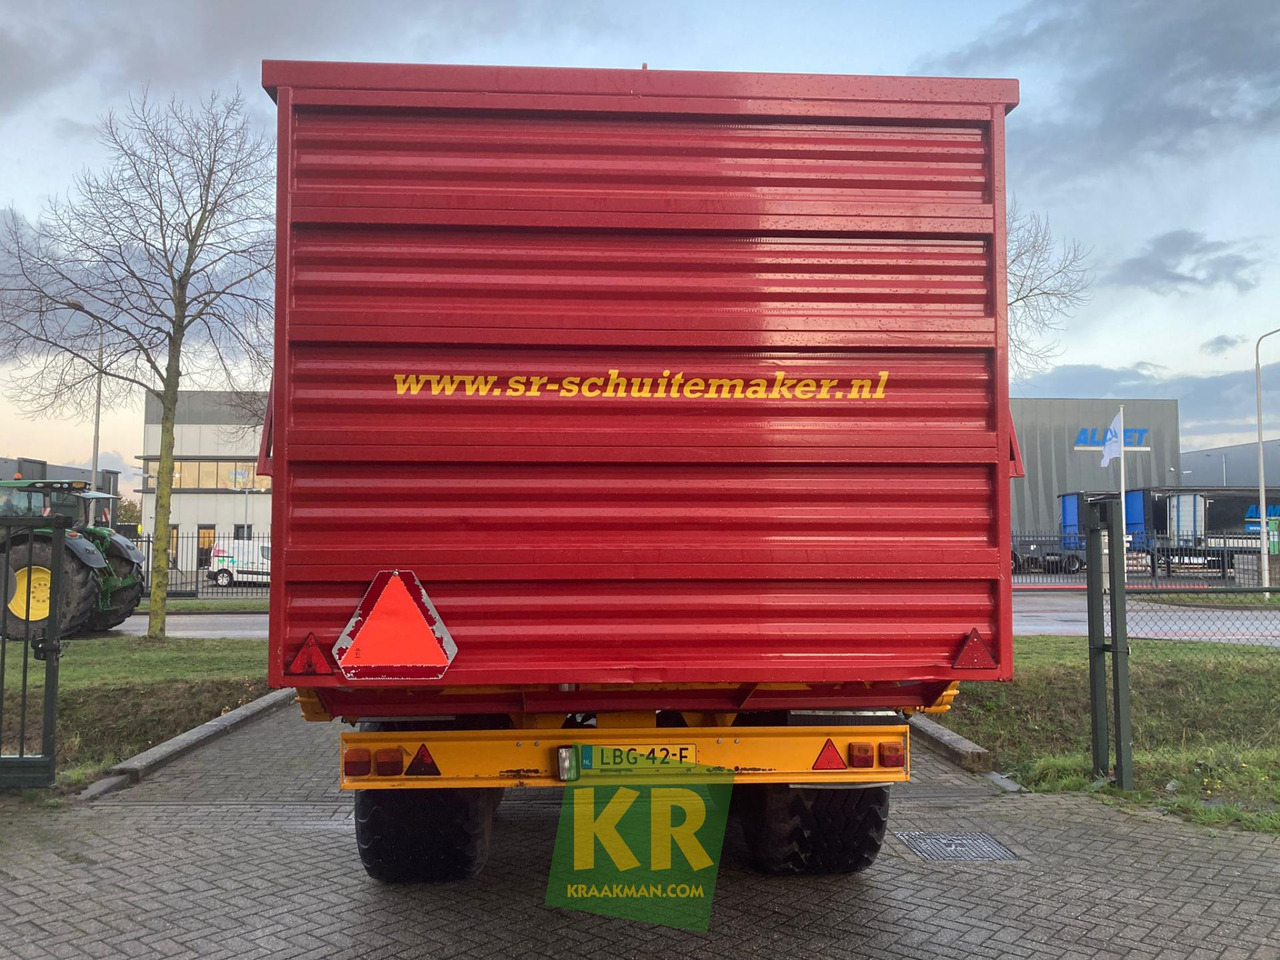 Self-loading wagon RAPIDE 145 Schuitemaker, SR-